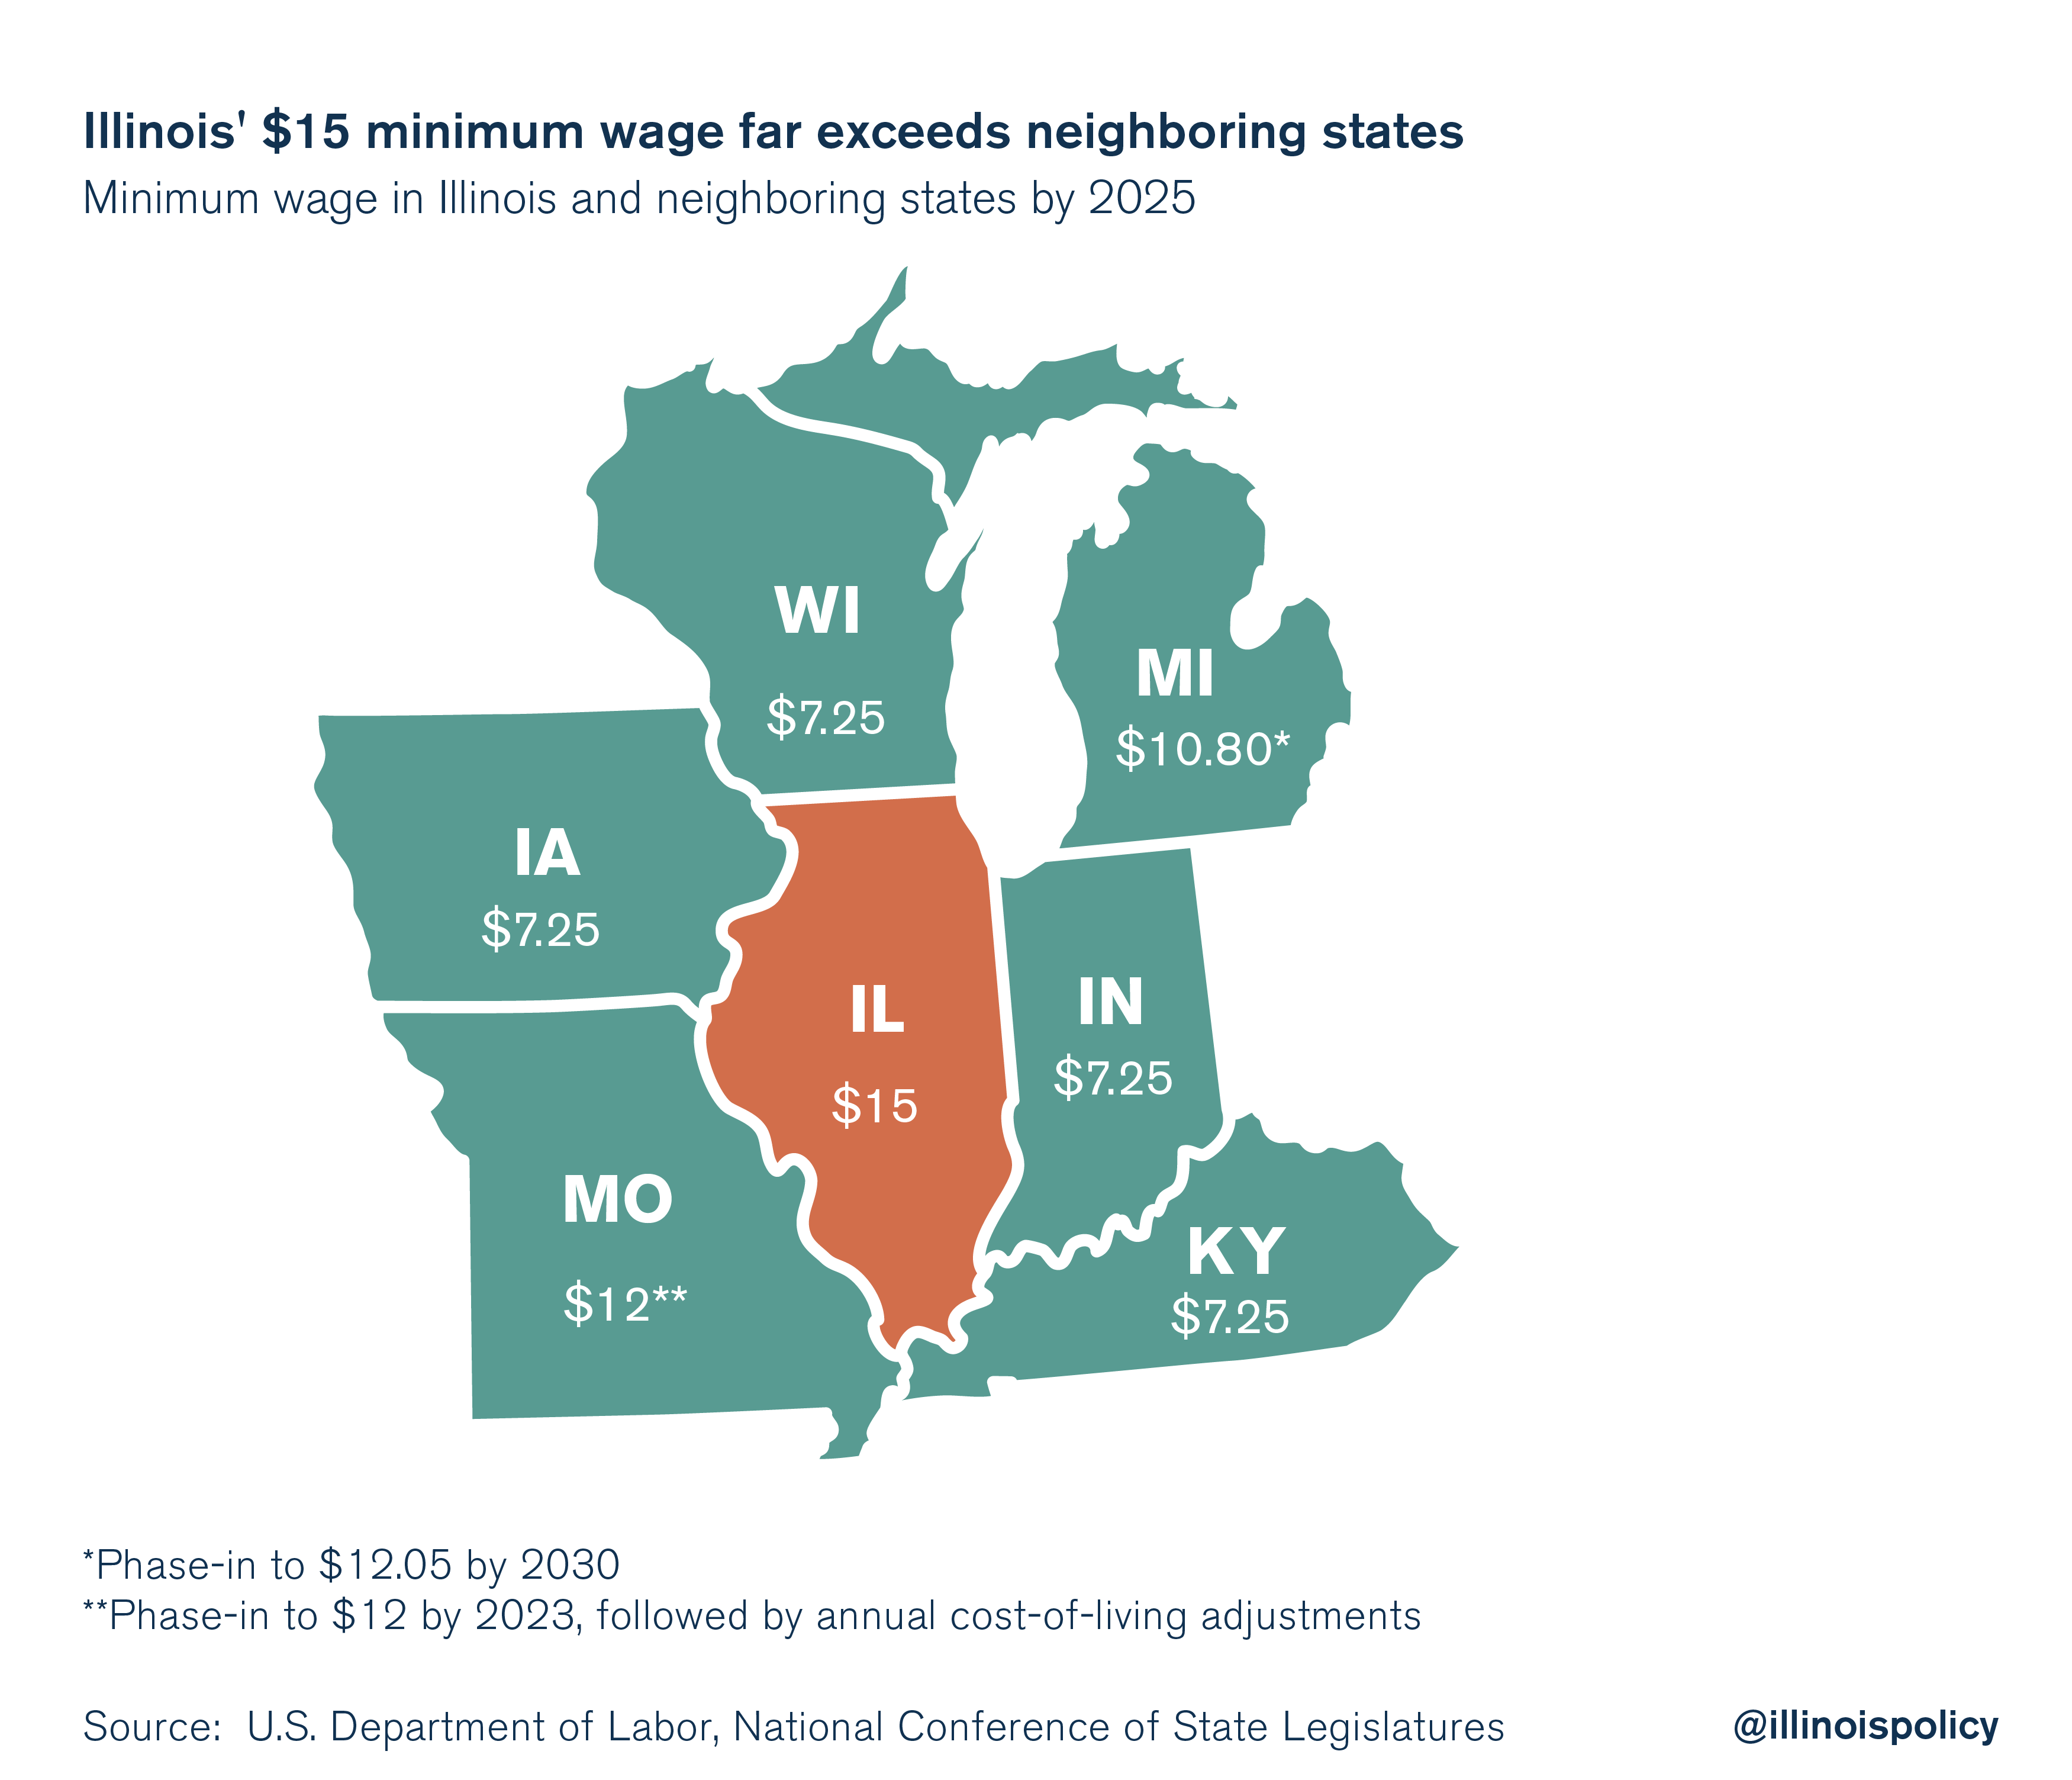 Illinois' minimum wage far exceeds neighboring states